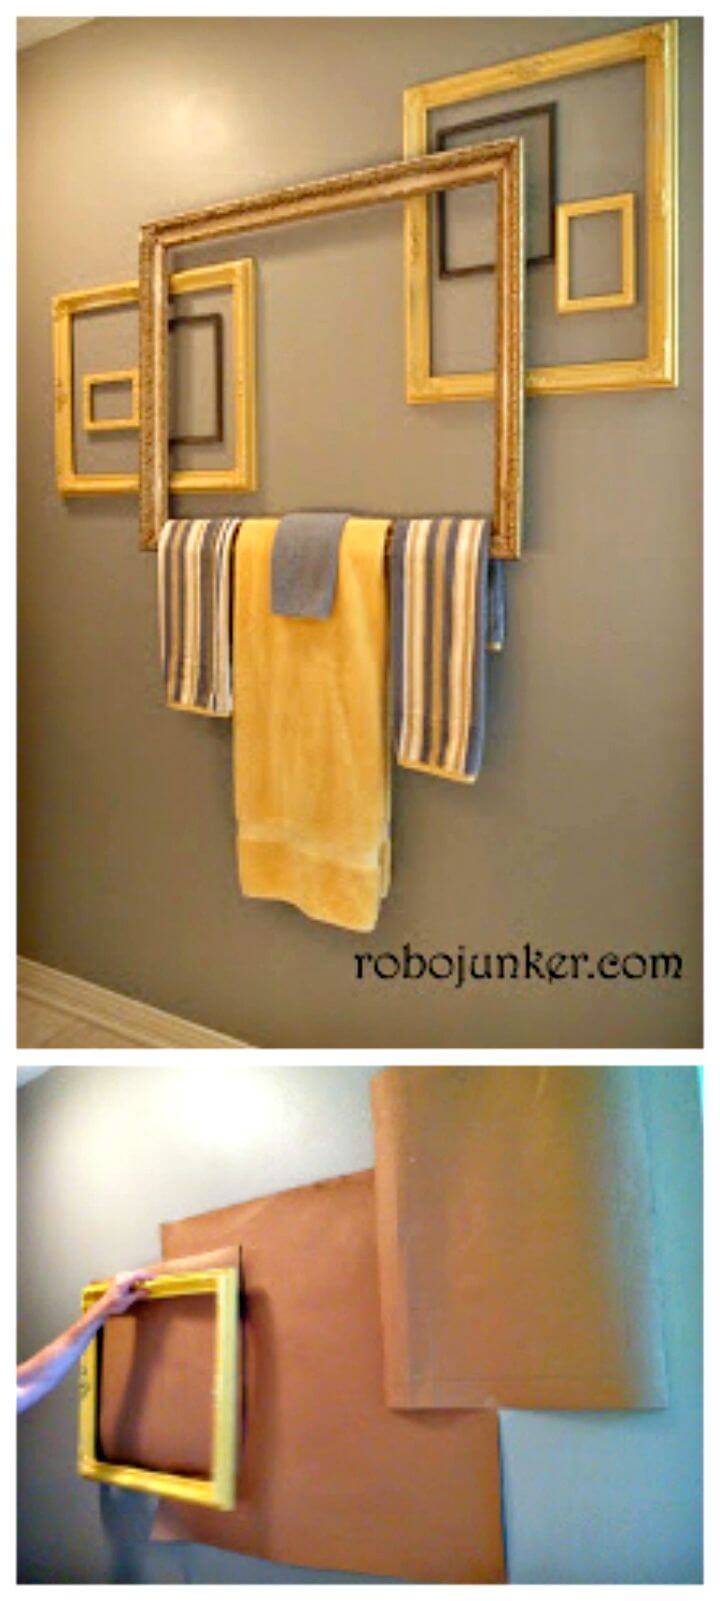 Easy DIY Towel Bar From Frames Tutorial